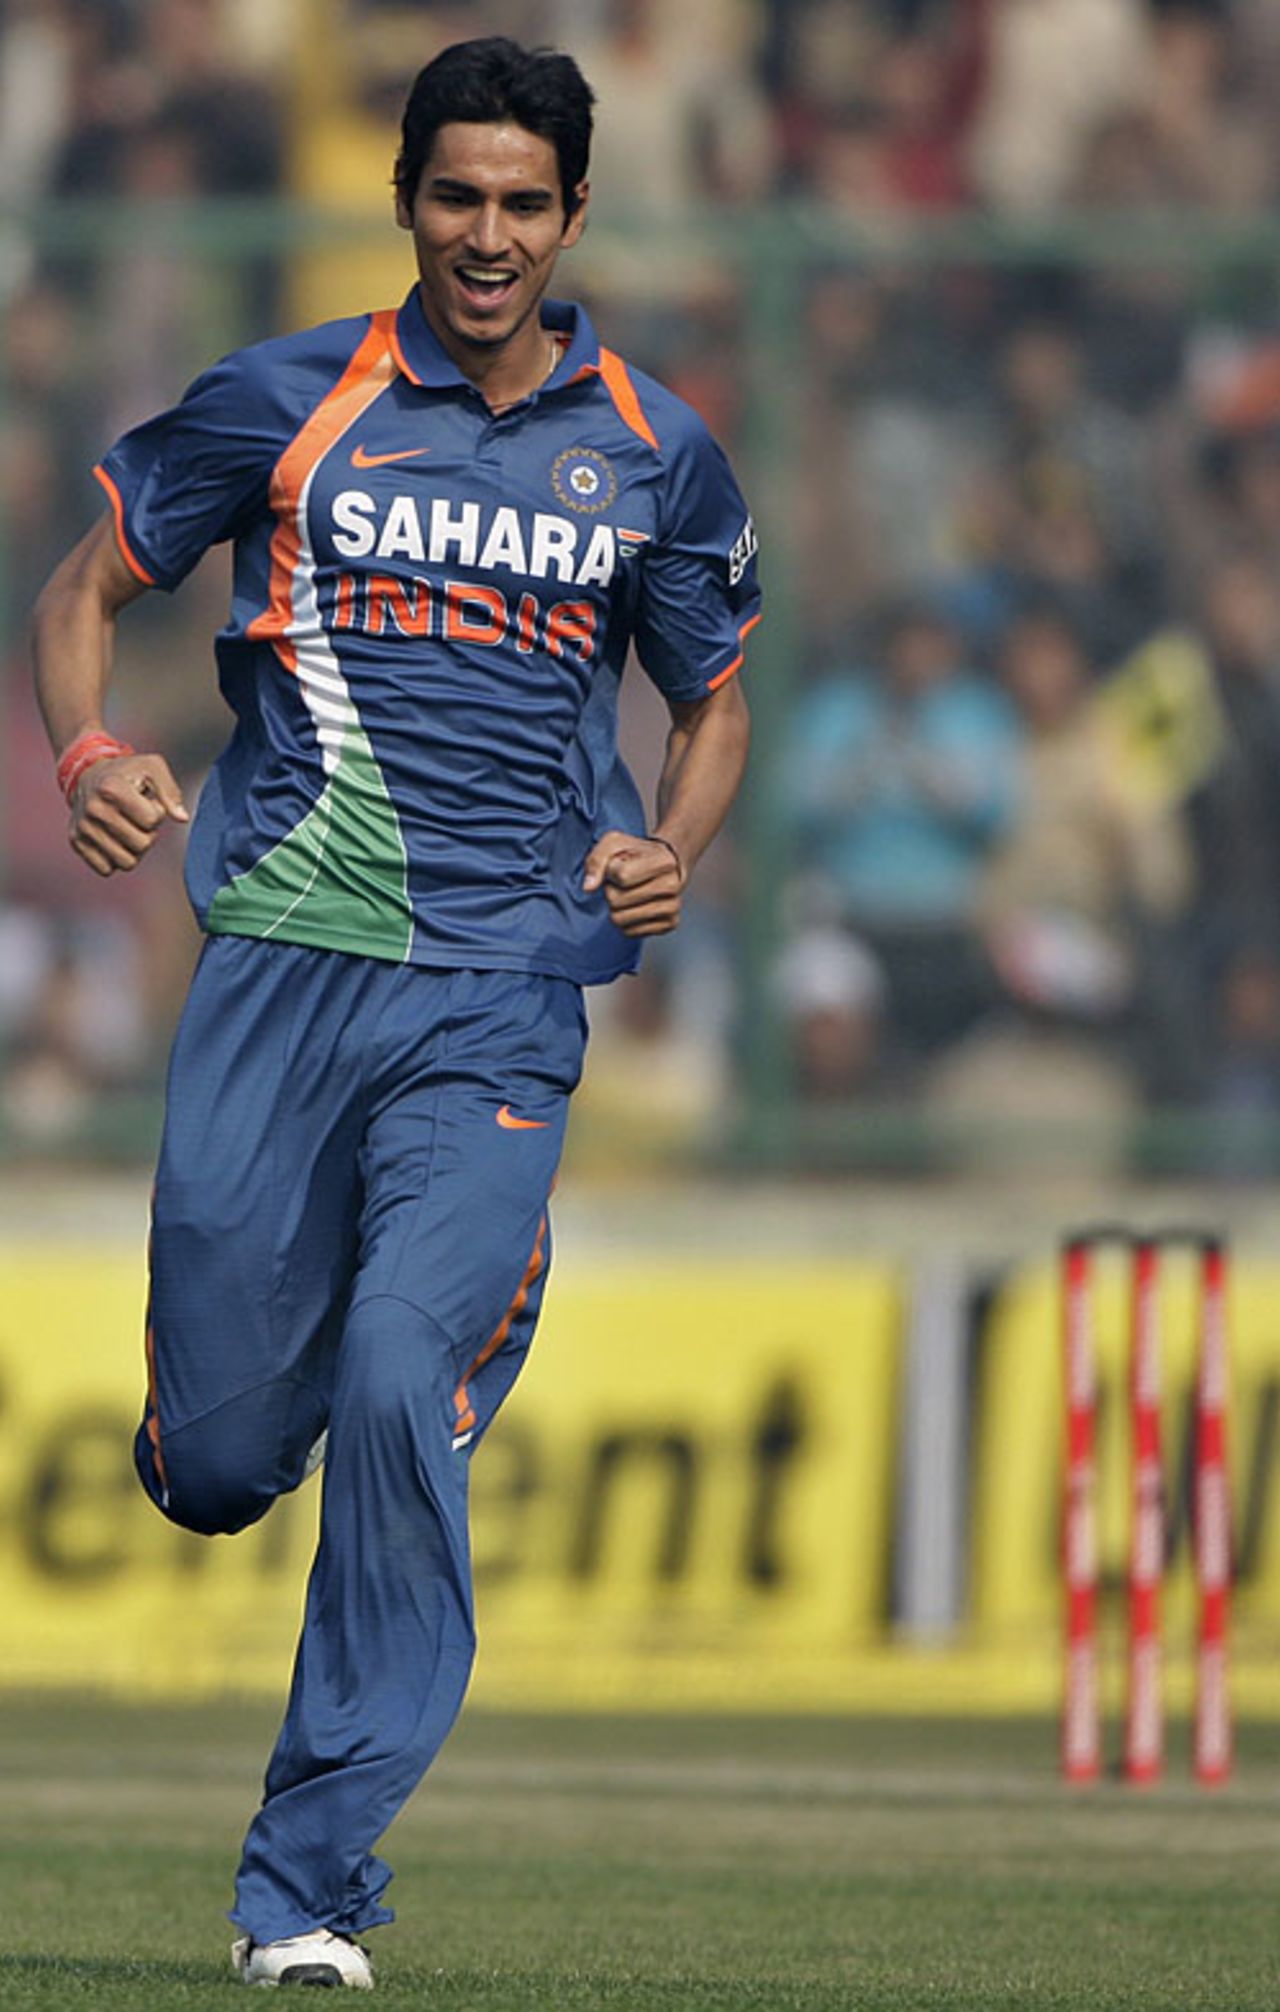 Sudeep Tyagi is cock-a-hoop after taking his first international wicket, India v Sri Lanka, 5th ODI, December 27, 2009